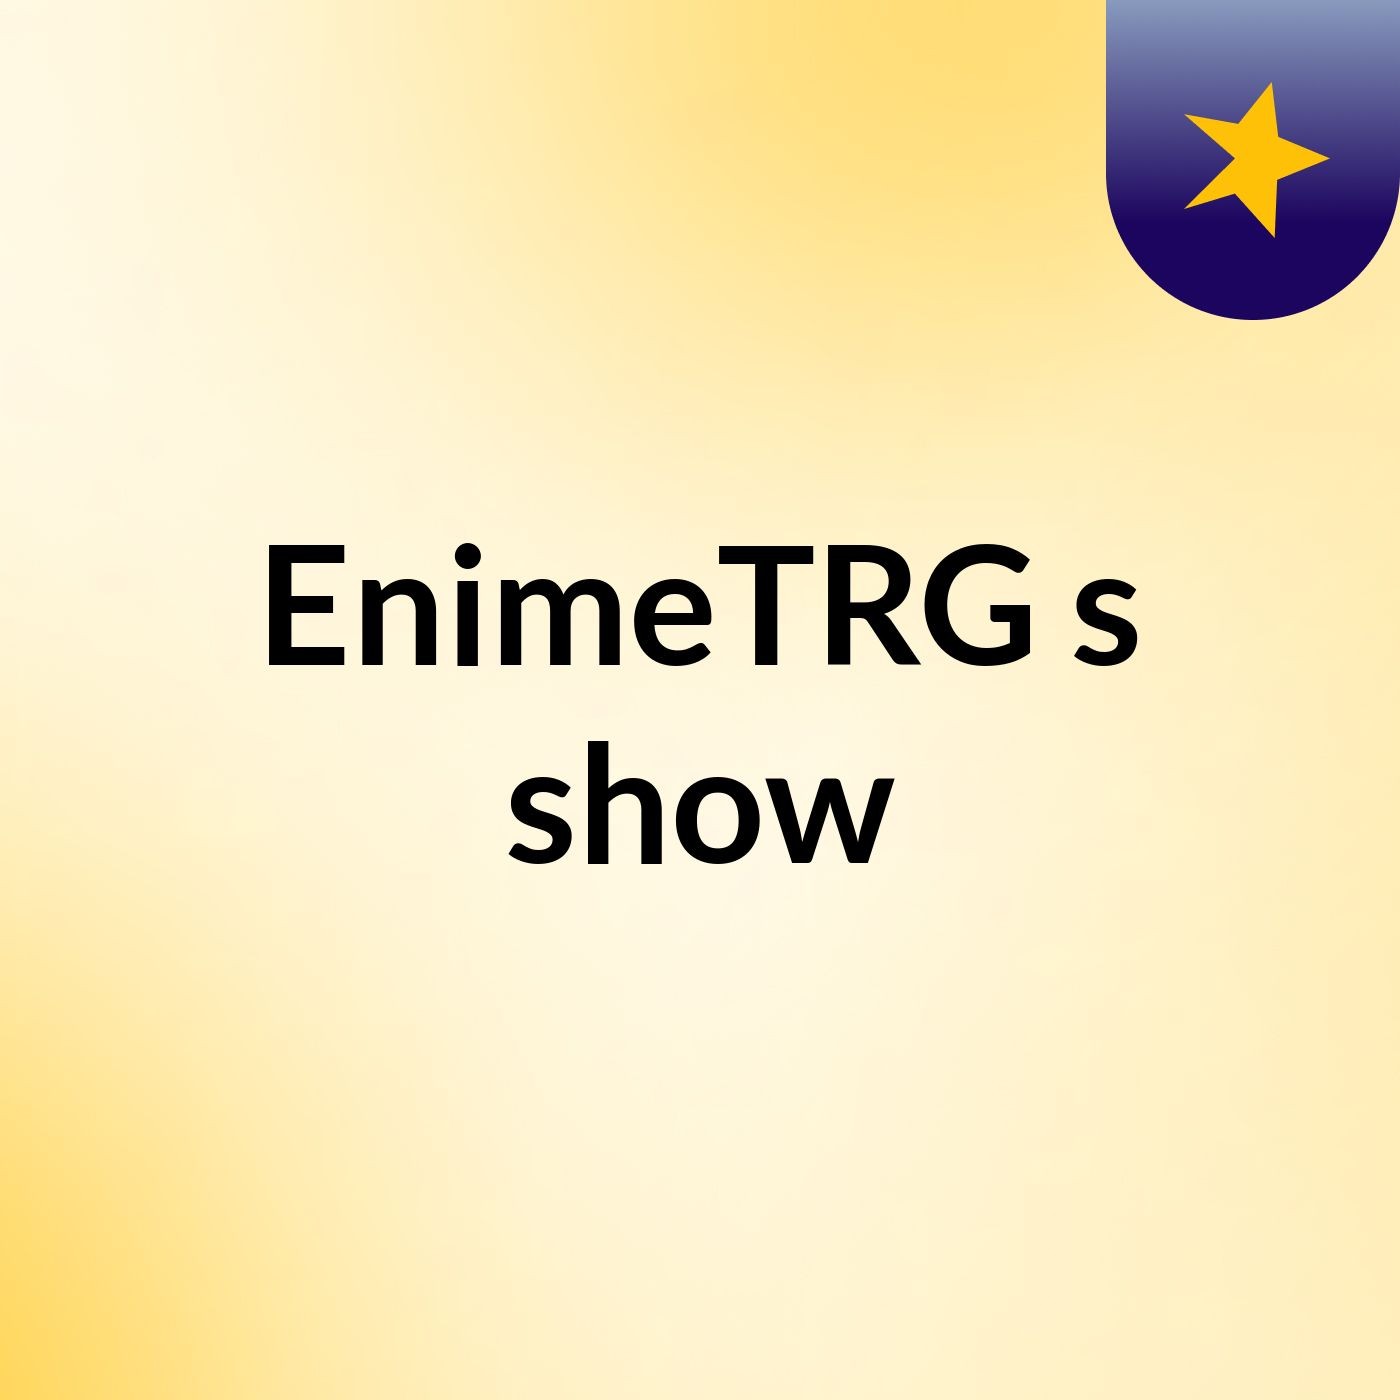 EnimeTRG's show